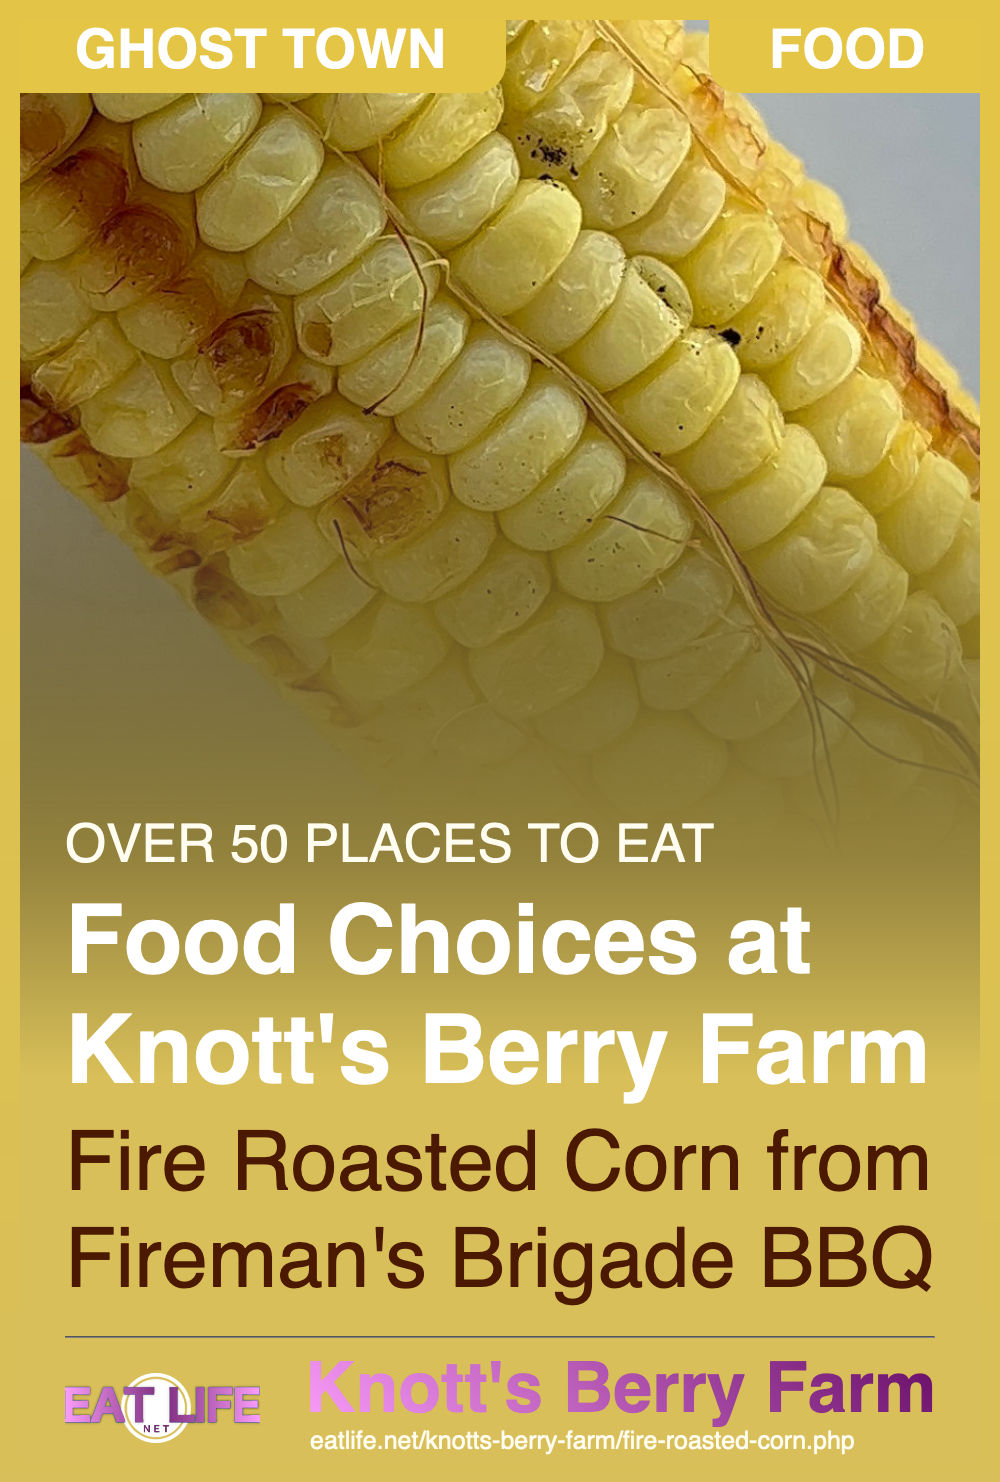 Fire Roasted Corn